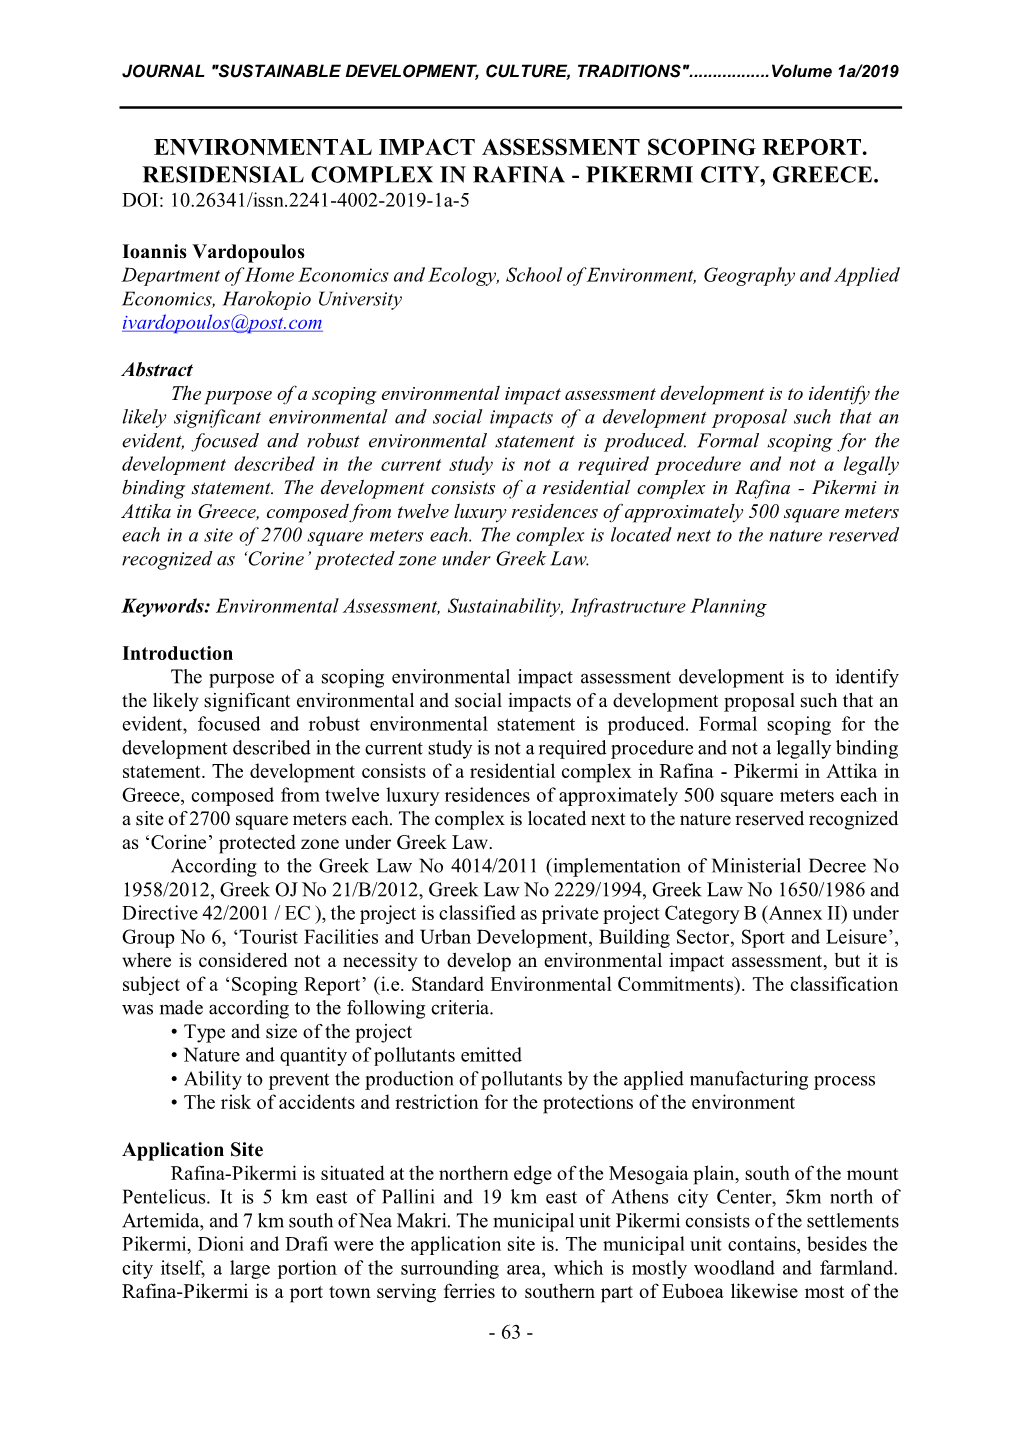 Environmental Impact Assessment Scoping Report